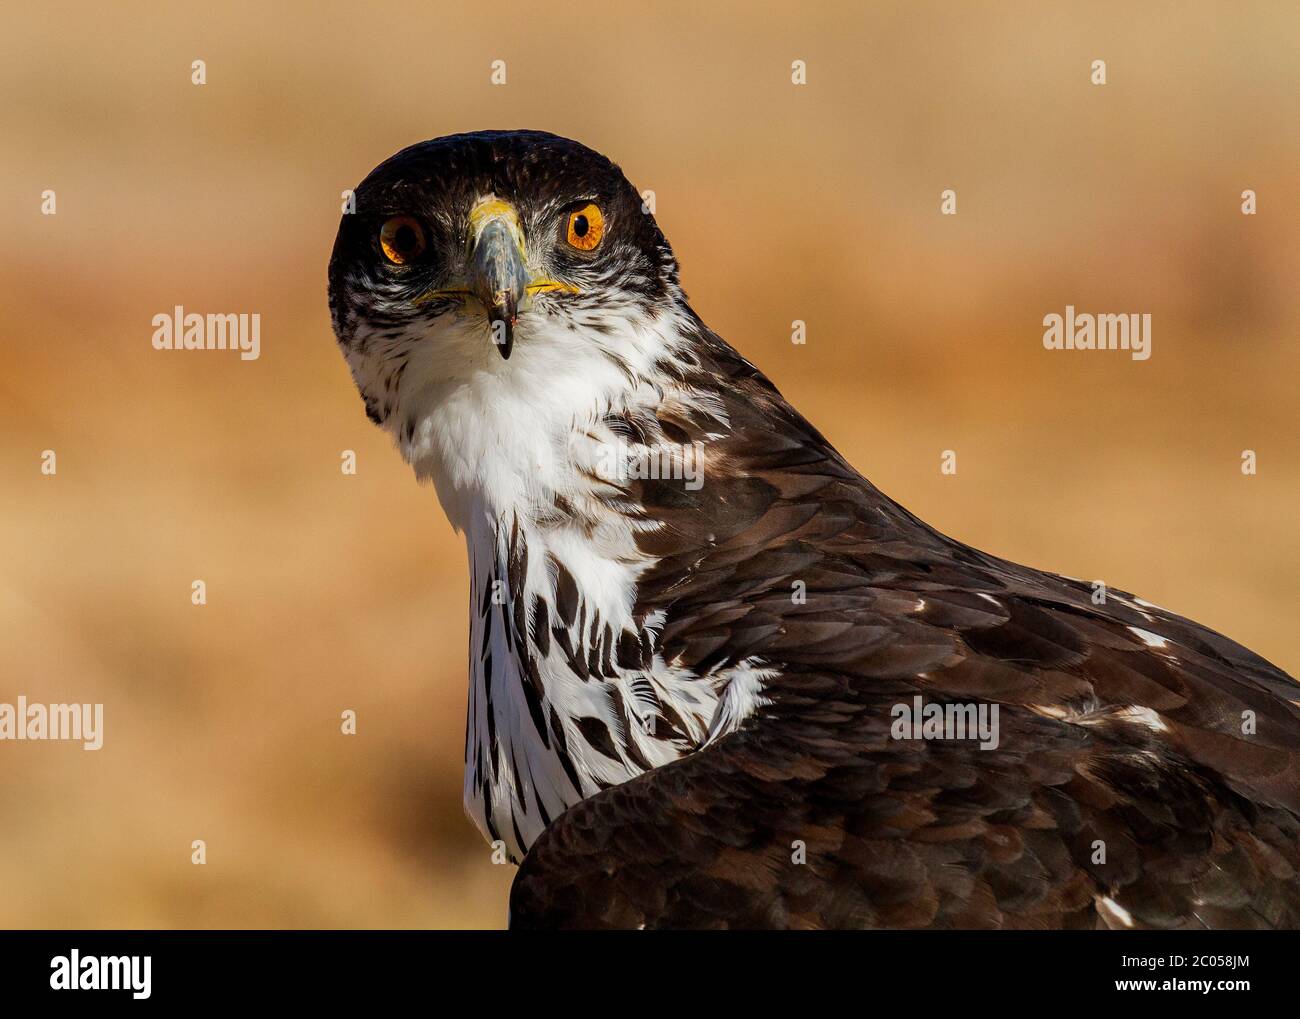 bird of prey portrait Stock Photo